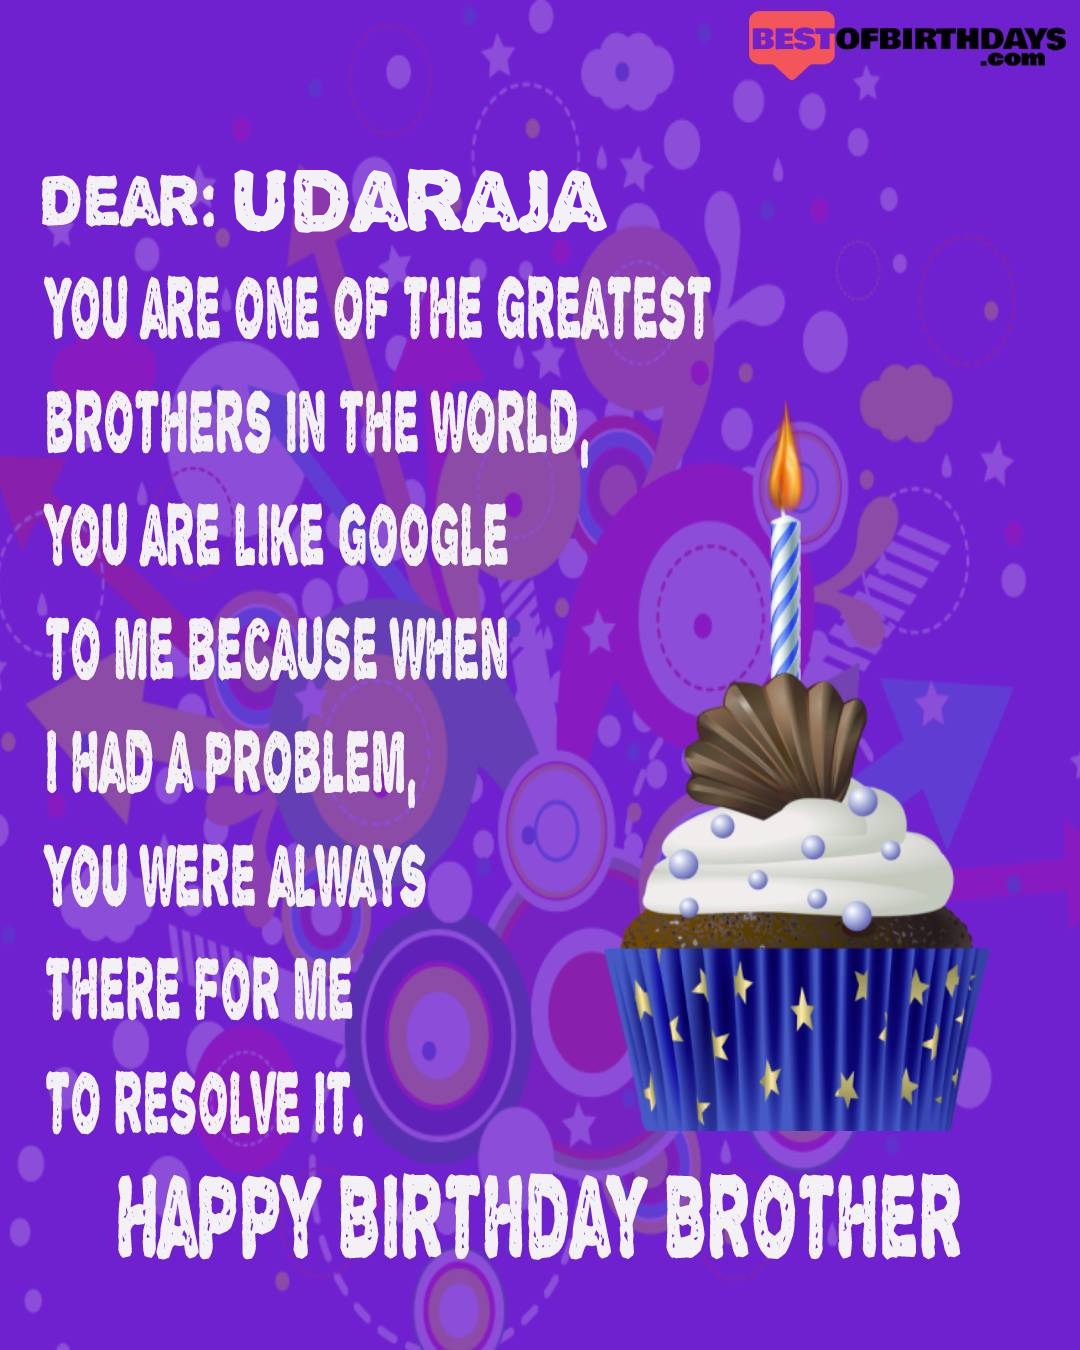 Happy birthday udaraja bhai brother bro